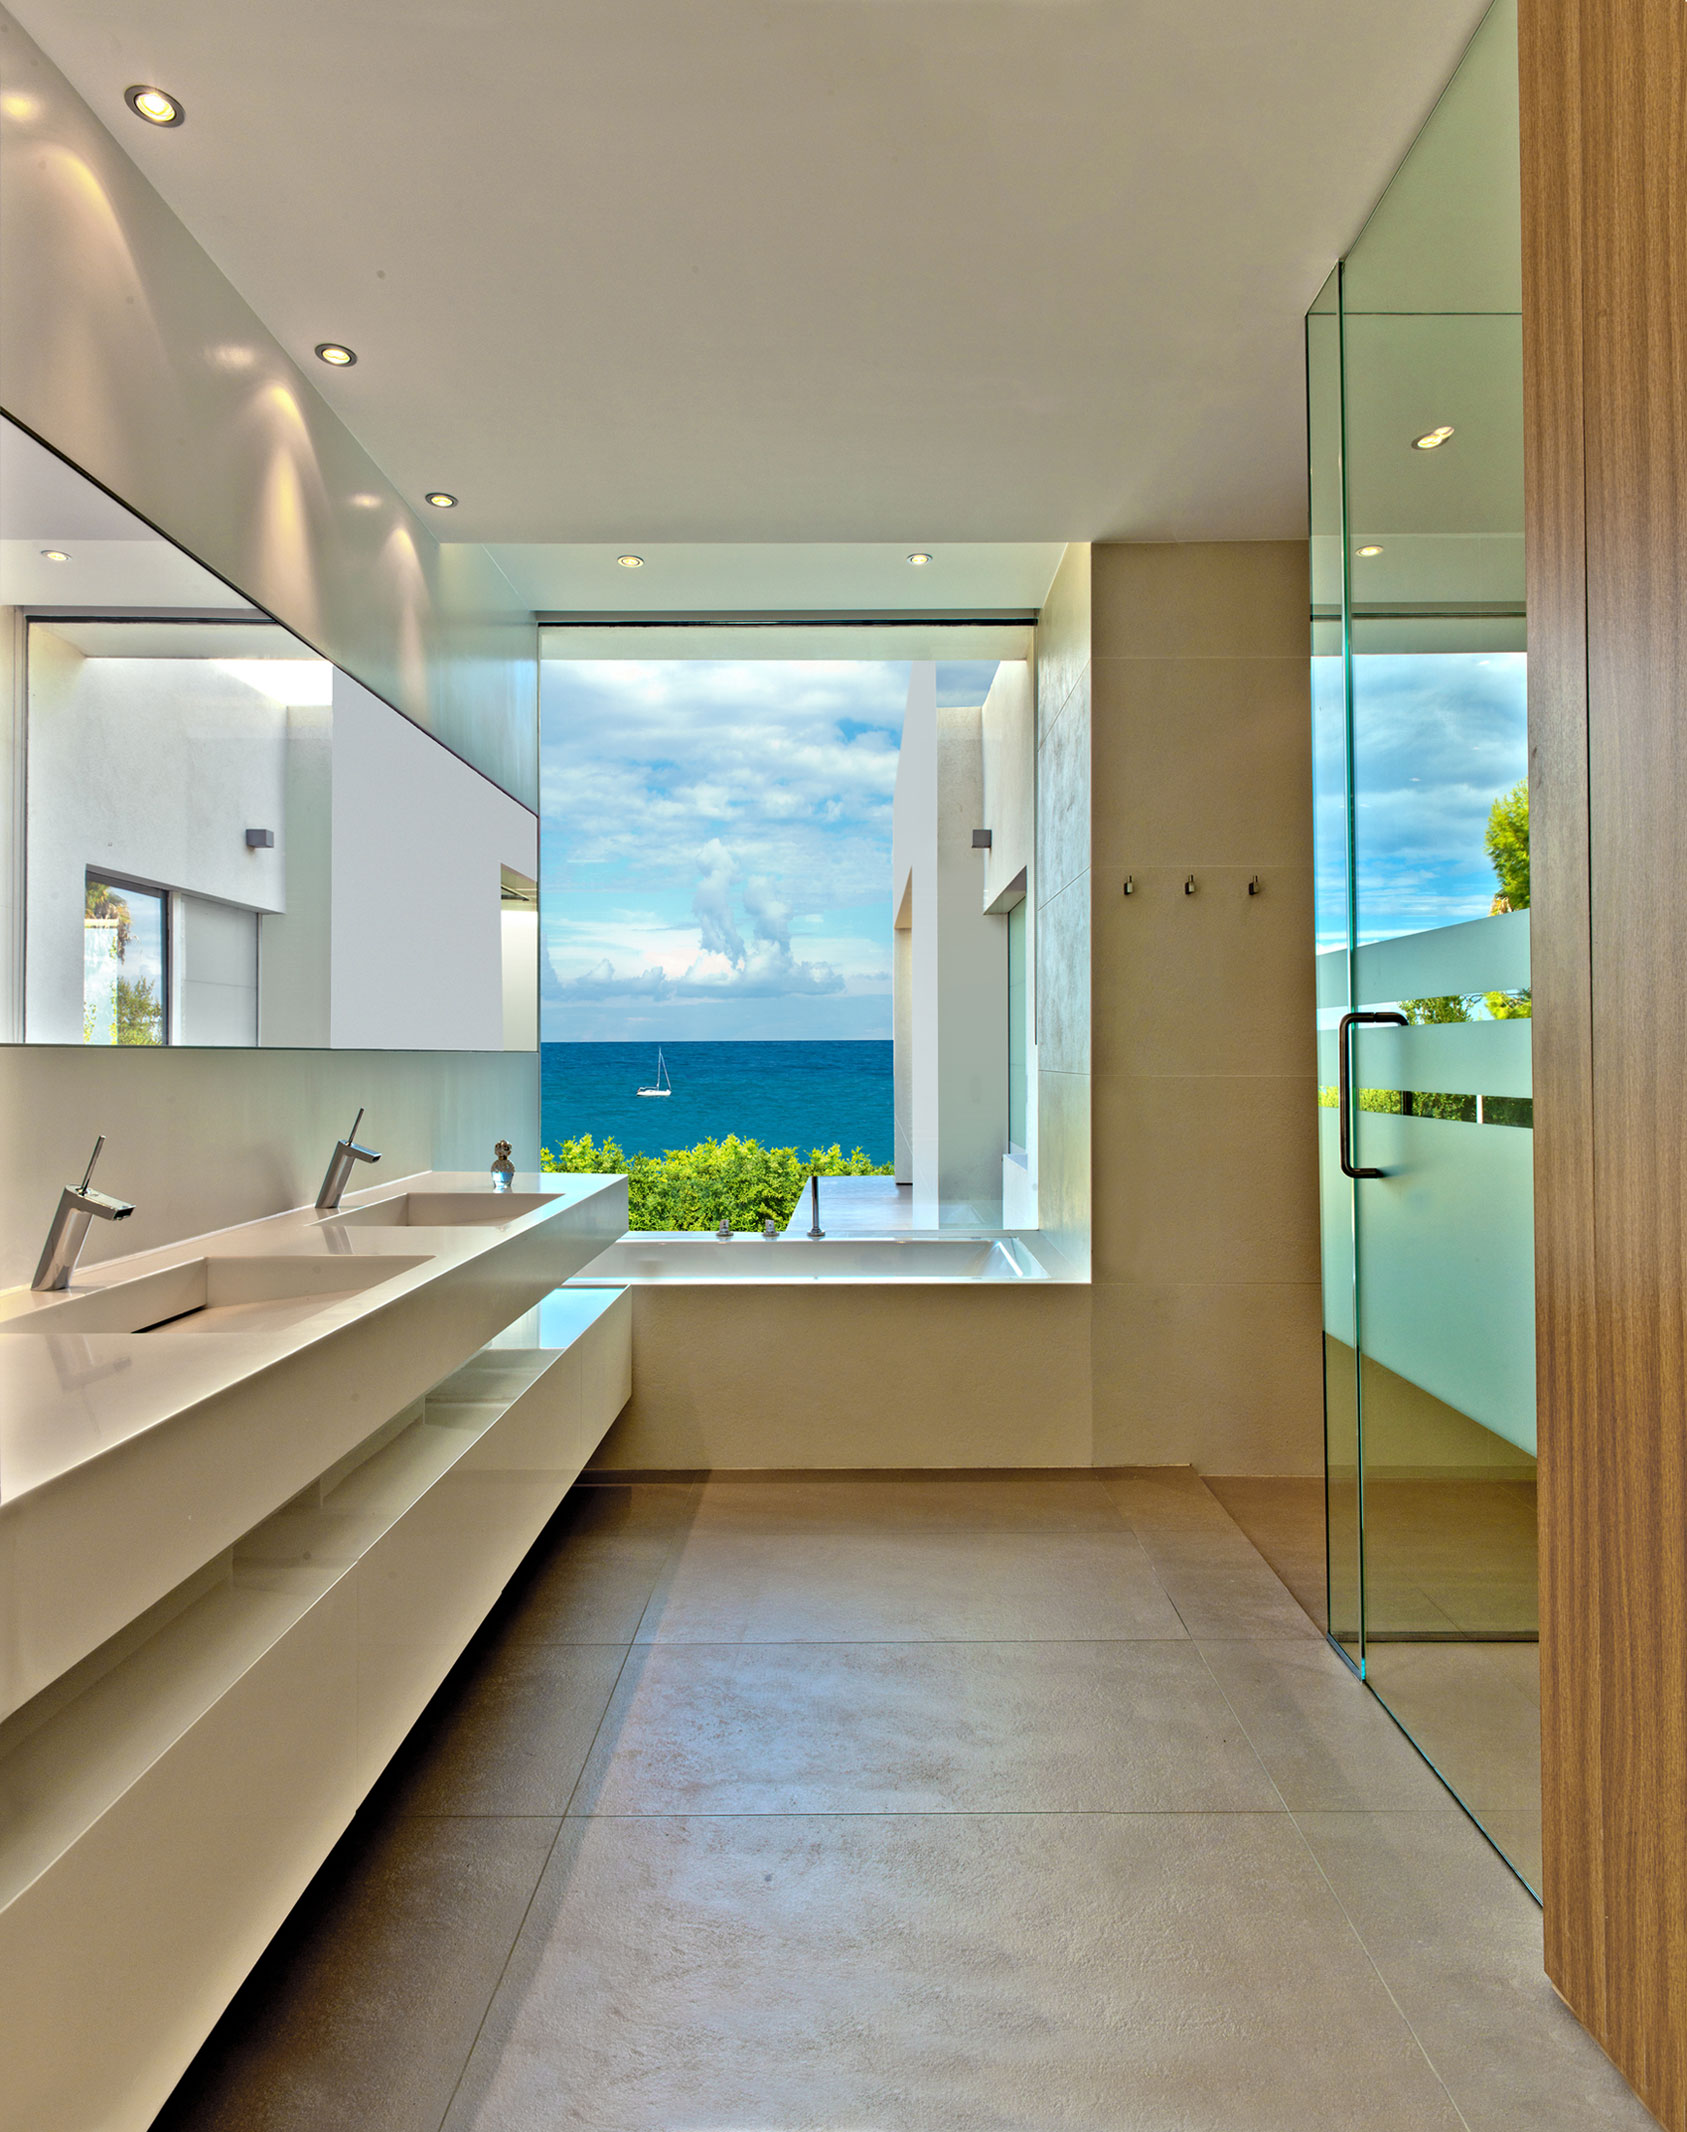 Lombok Architect - Stylish Modern Mediterranean Villa with Ocean View Picture 11